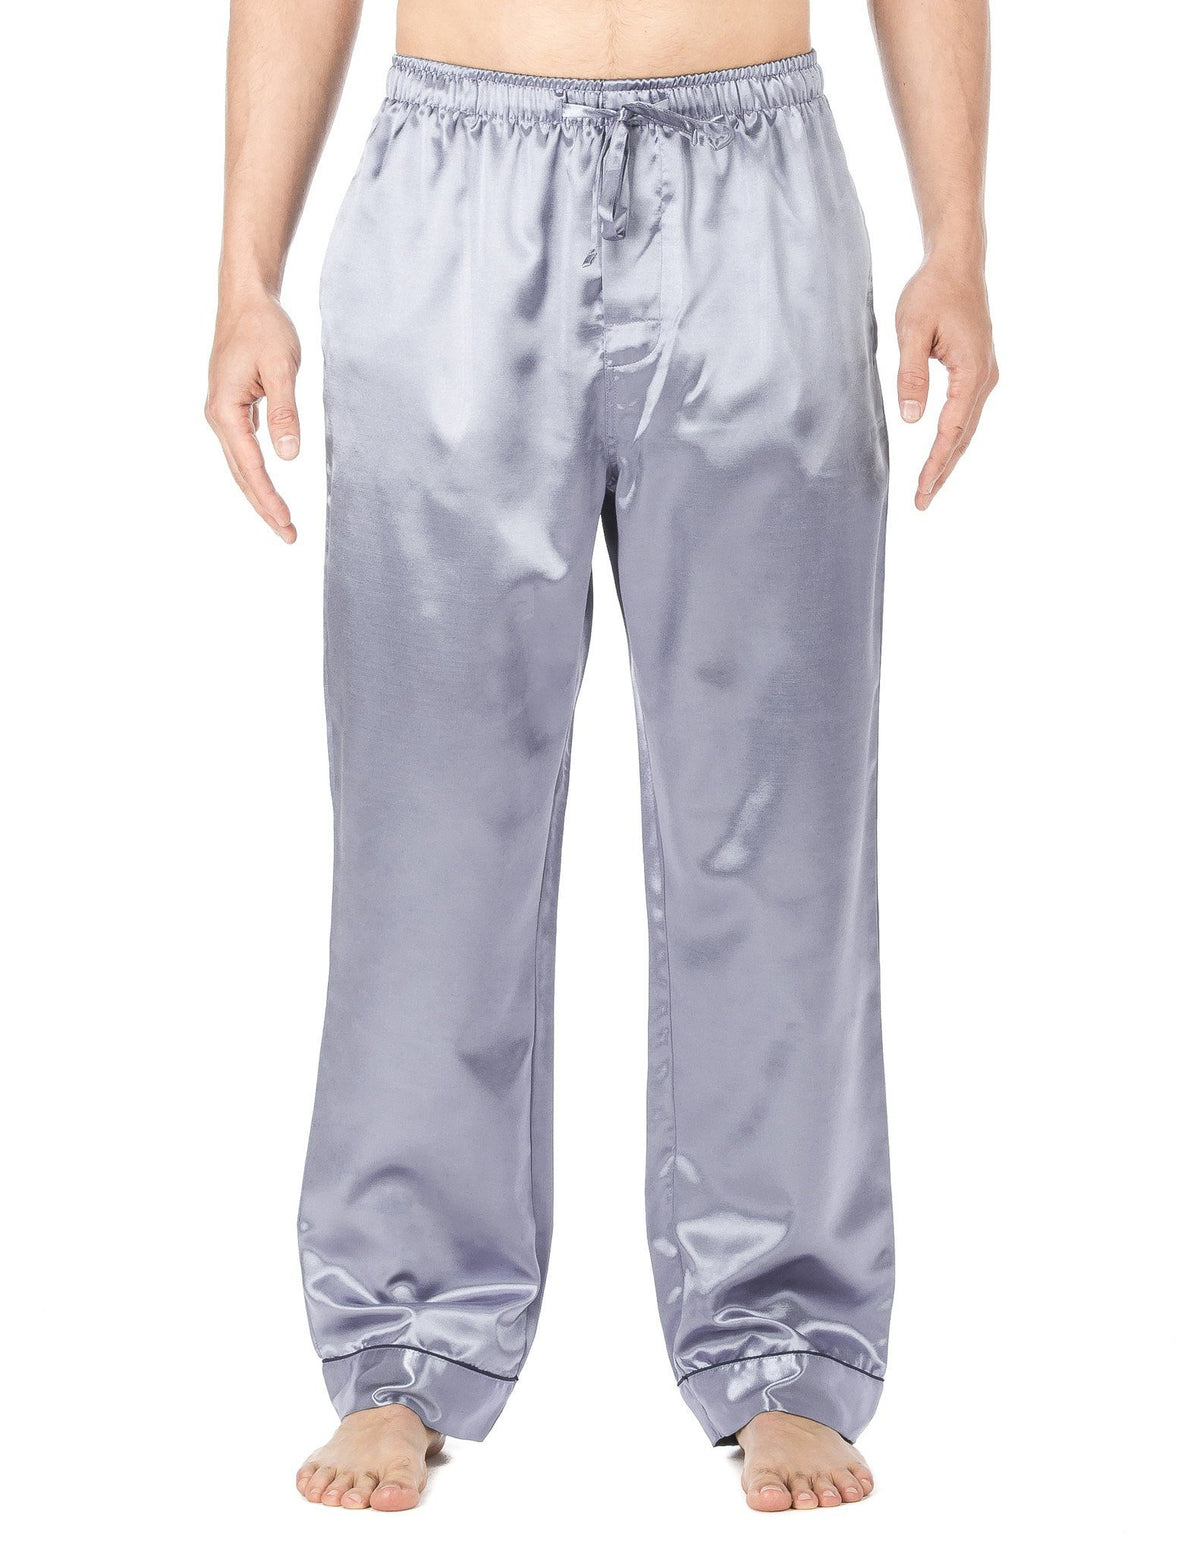 Men's Premium Satin Sleep/Lounge Pants - Solid Light Blue